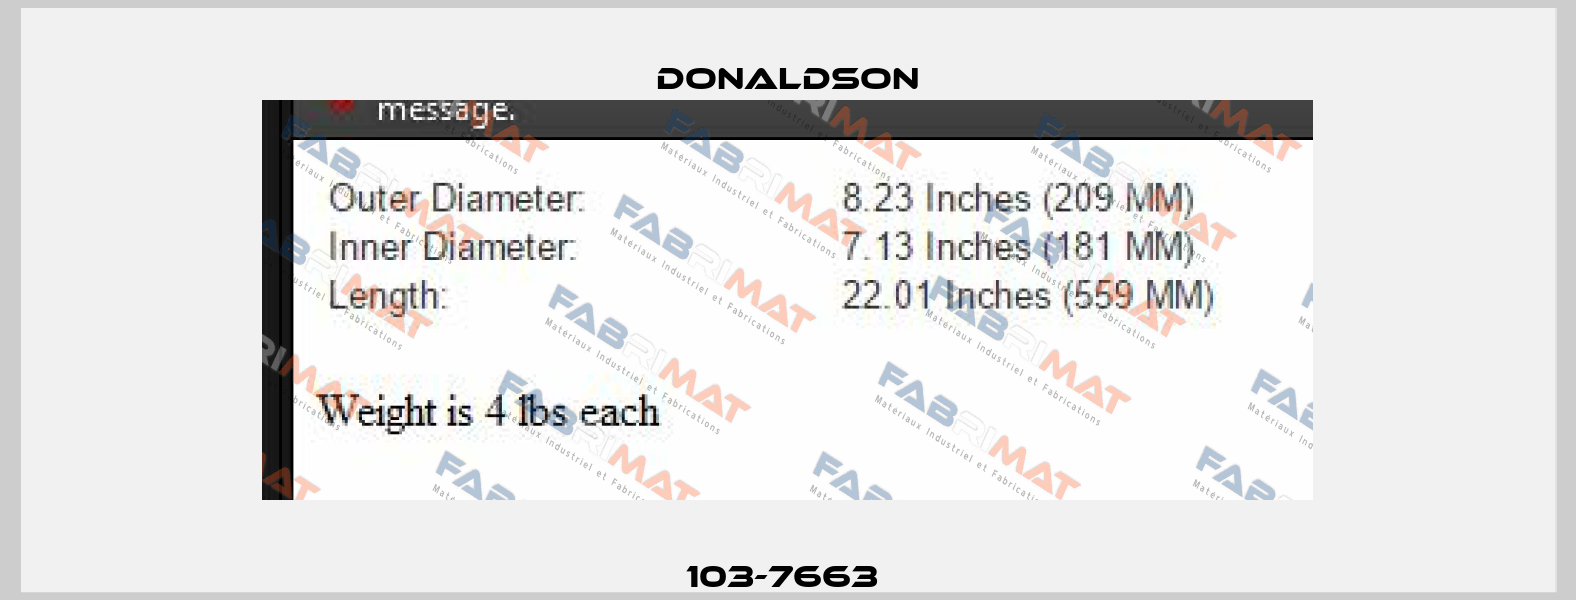 103-7663  Donaldson